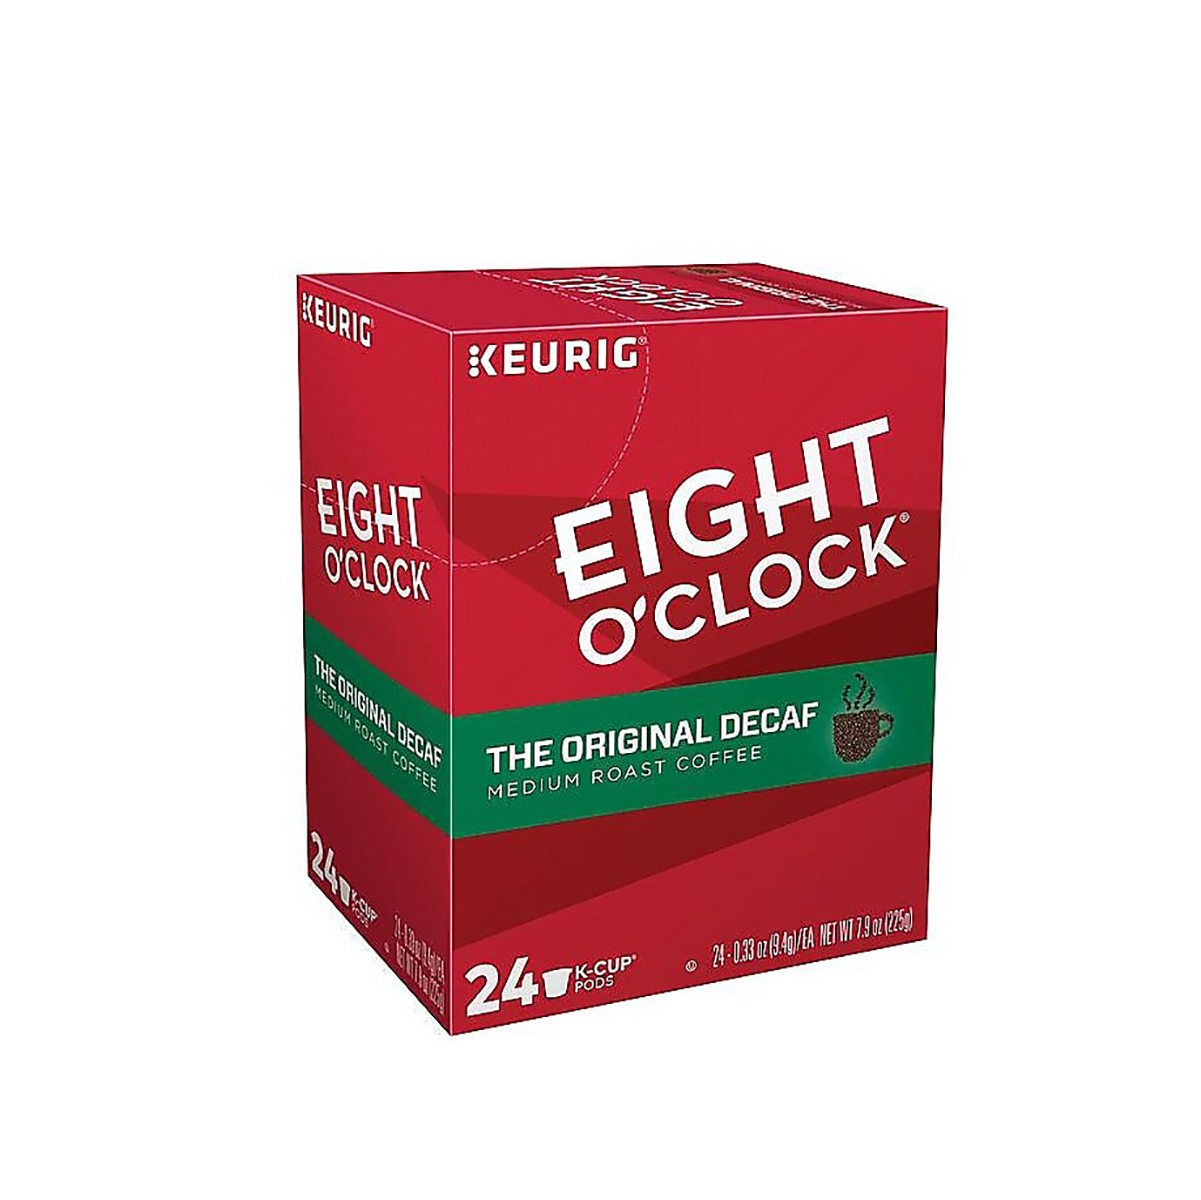 Keurig(R) Eight OClock Original Decaf K-Cup(R) - 24 Count